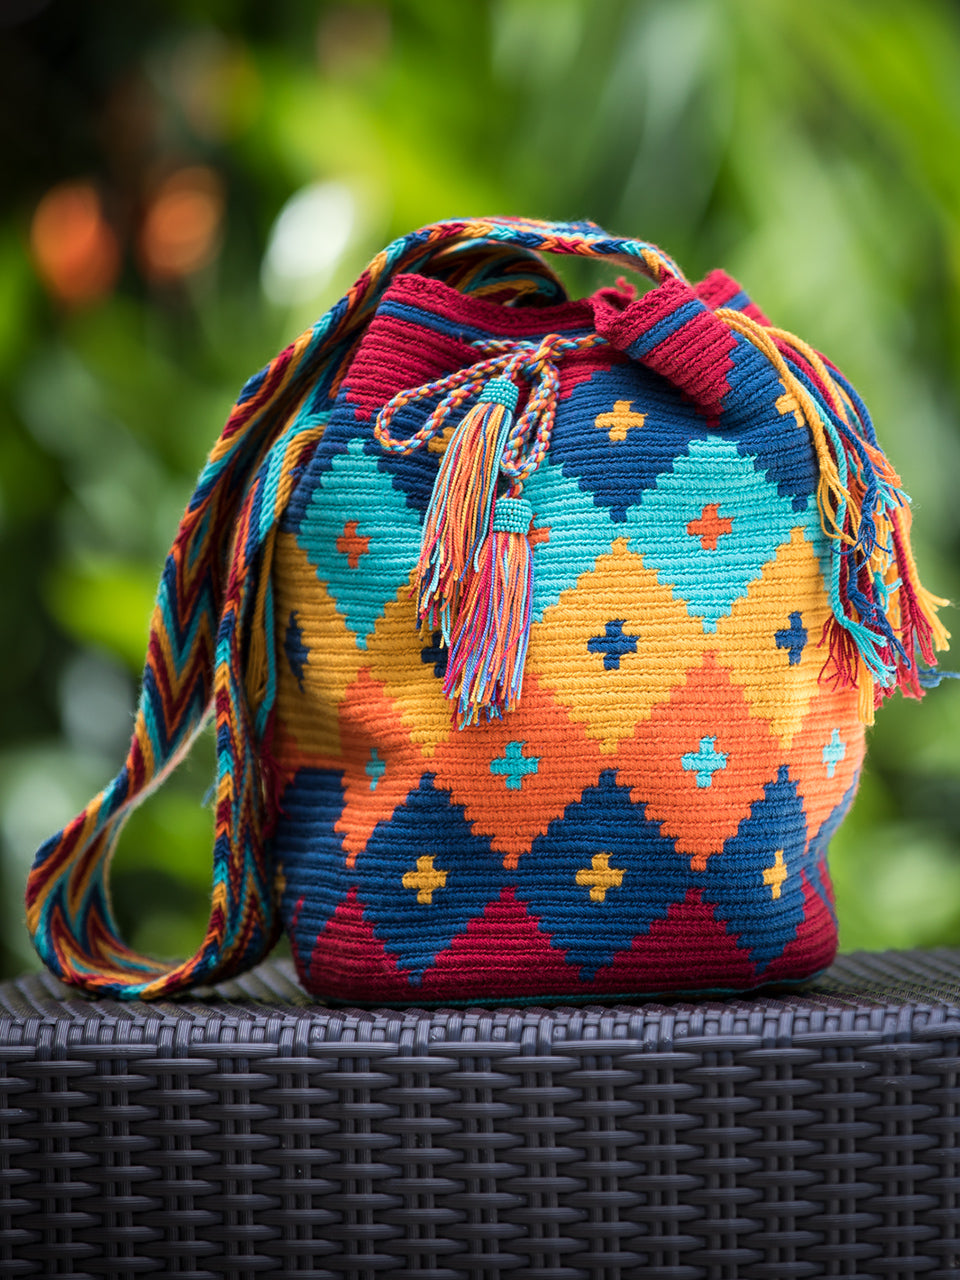 Diamond pattern orange, yellow, red and blue woven shoulder bag with tassels and beads Palmazul Beachwear Lifestyle Wayuu Mochila